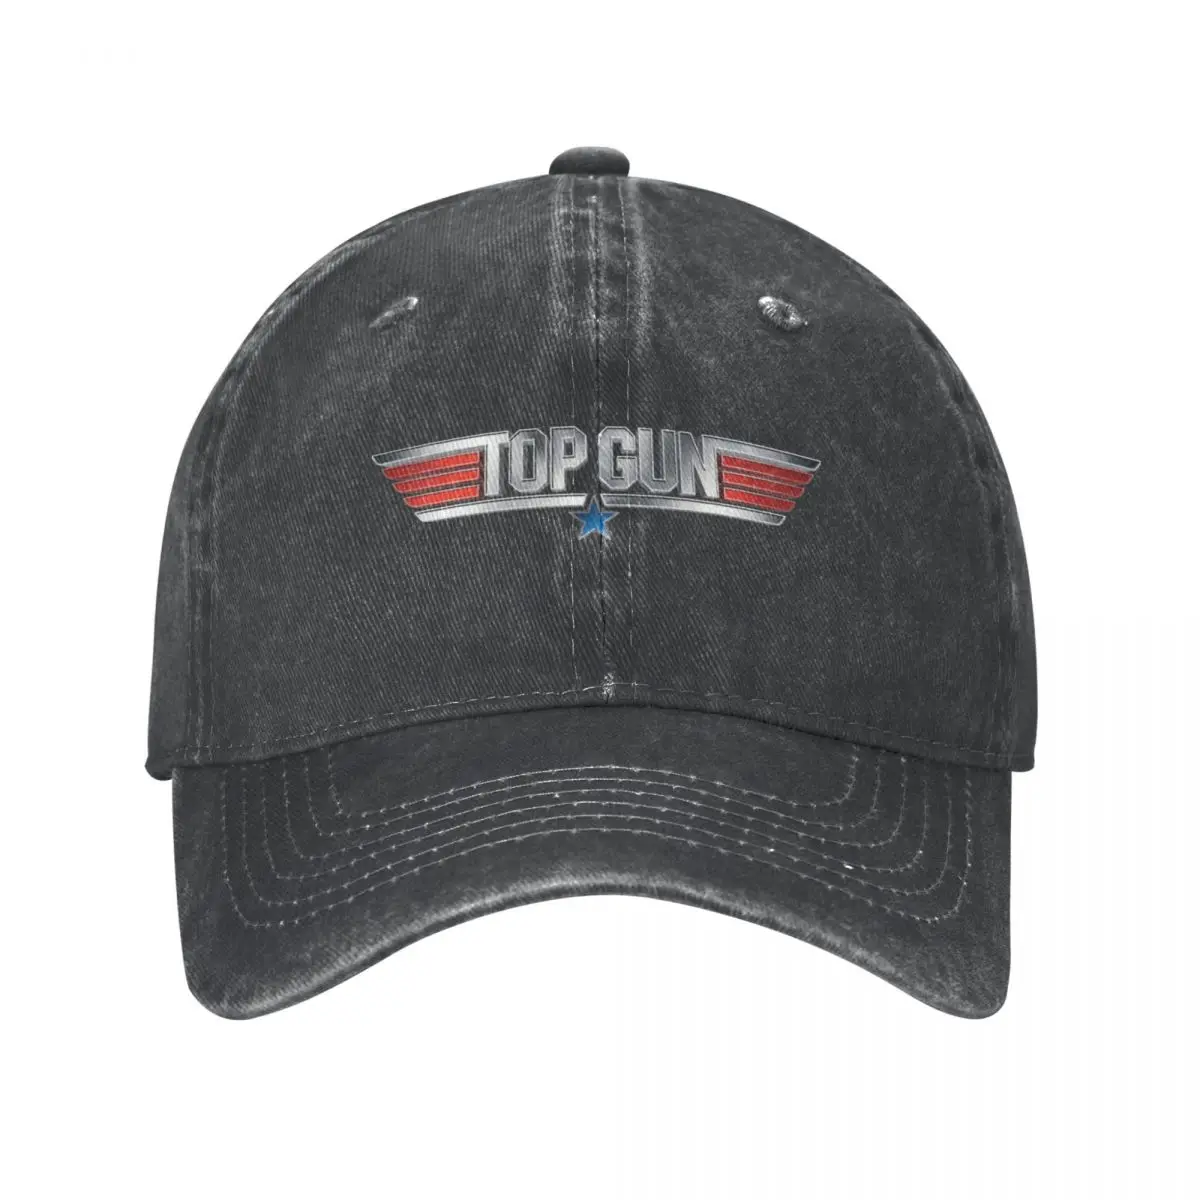 

Top Gun Stars & Stripes Movie Logo Baseball Caps Vintage Distressed Washed Snapback Cap for Men Women Outdoor Caps Hat